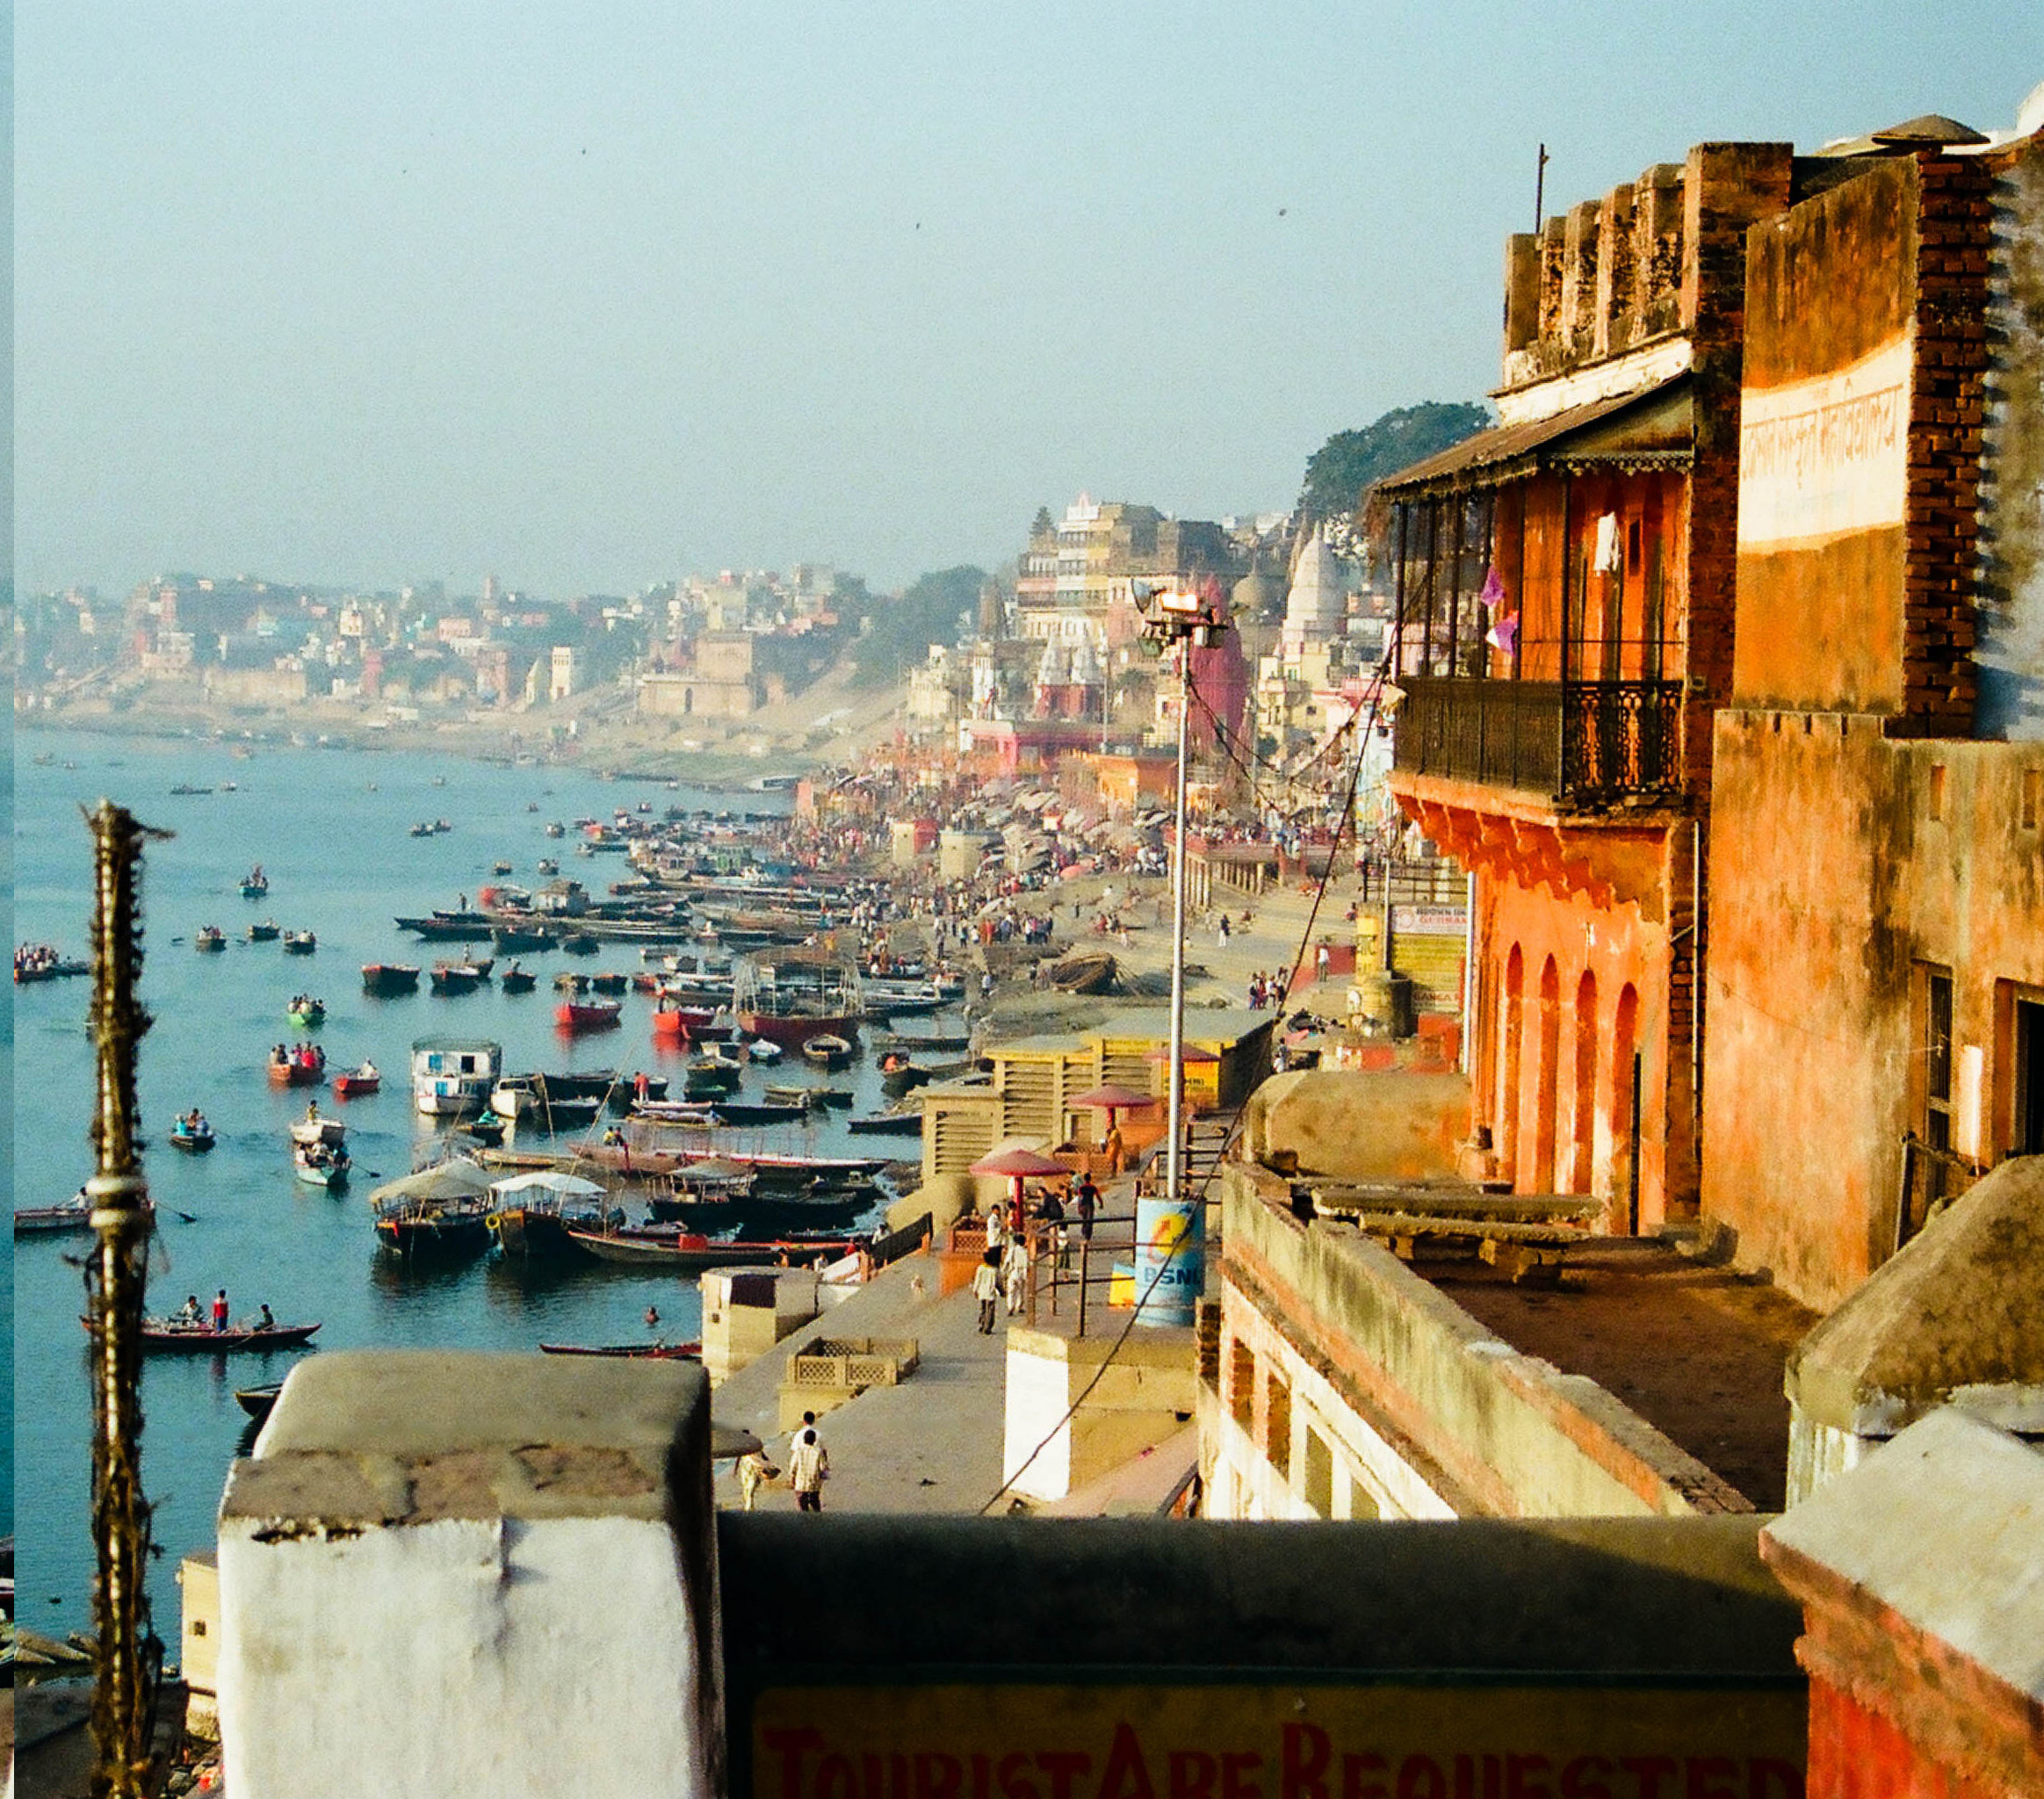 Sightseeing of Temple City Varanasi